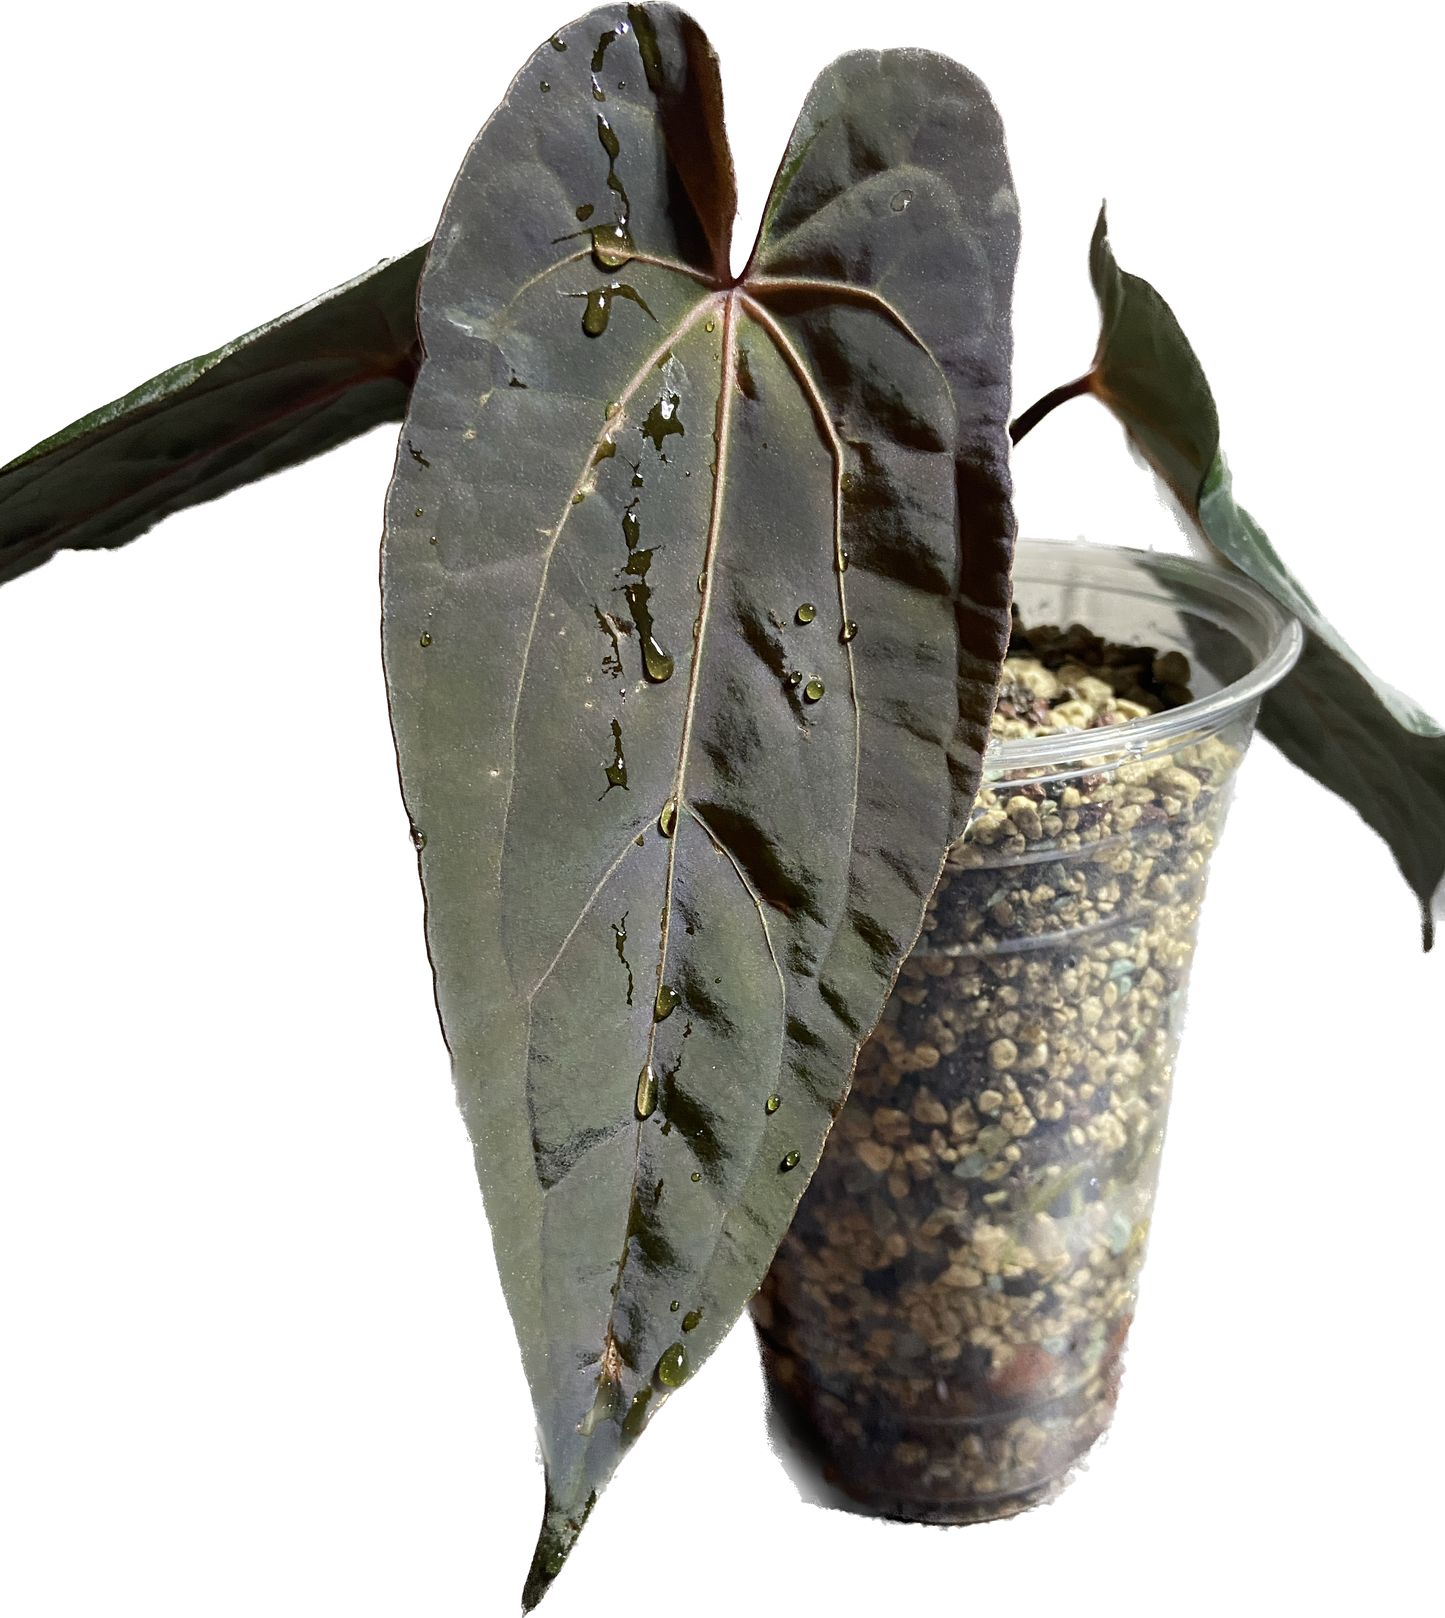 Anthurium (dreamweaver x papillilaminum Ree Gardens) x forgetii seedling